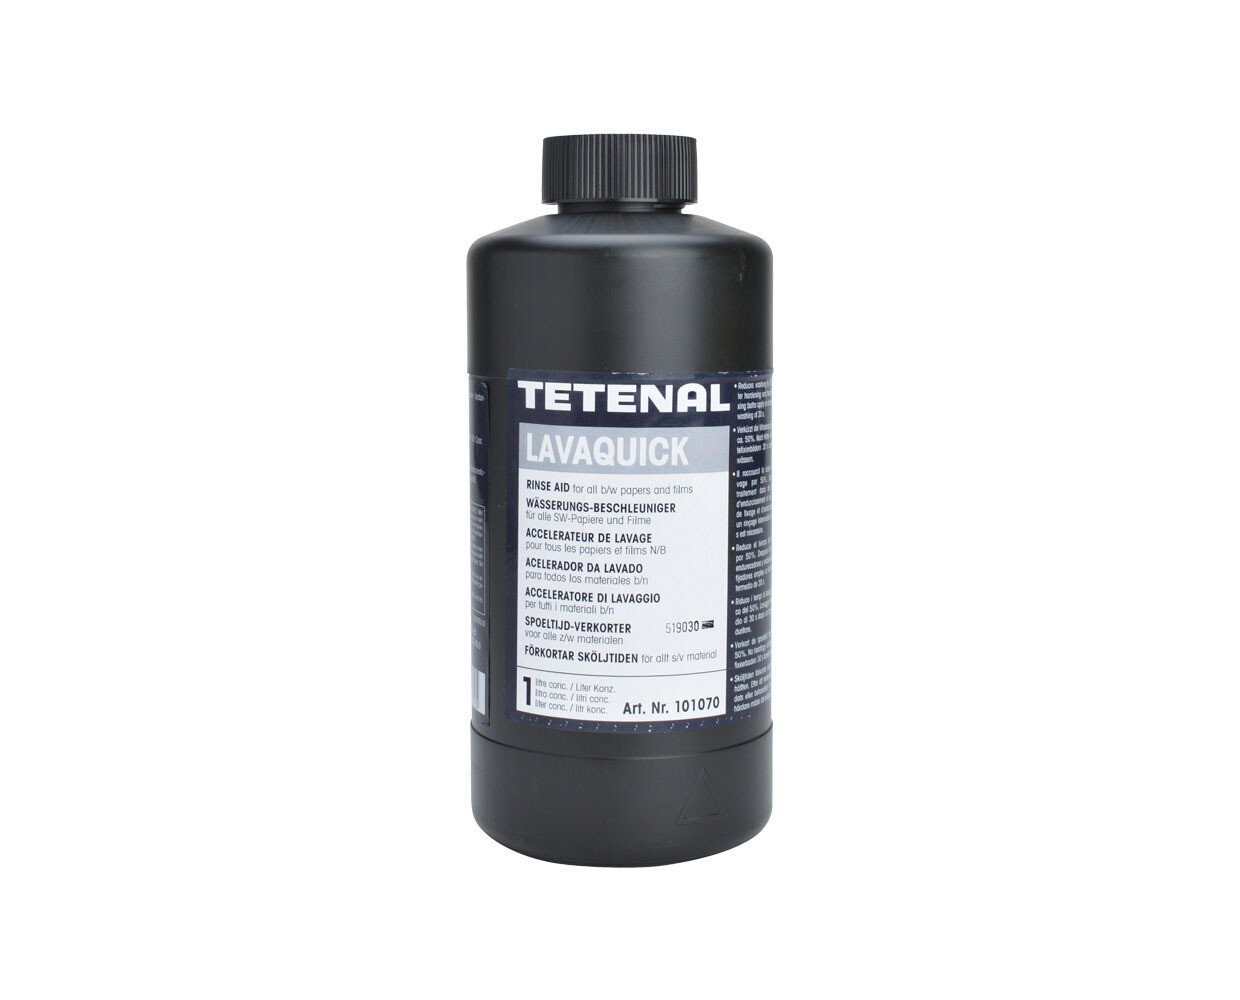 TETENAL Lavaquick 1 Liter - 101070